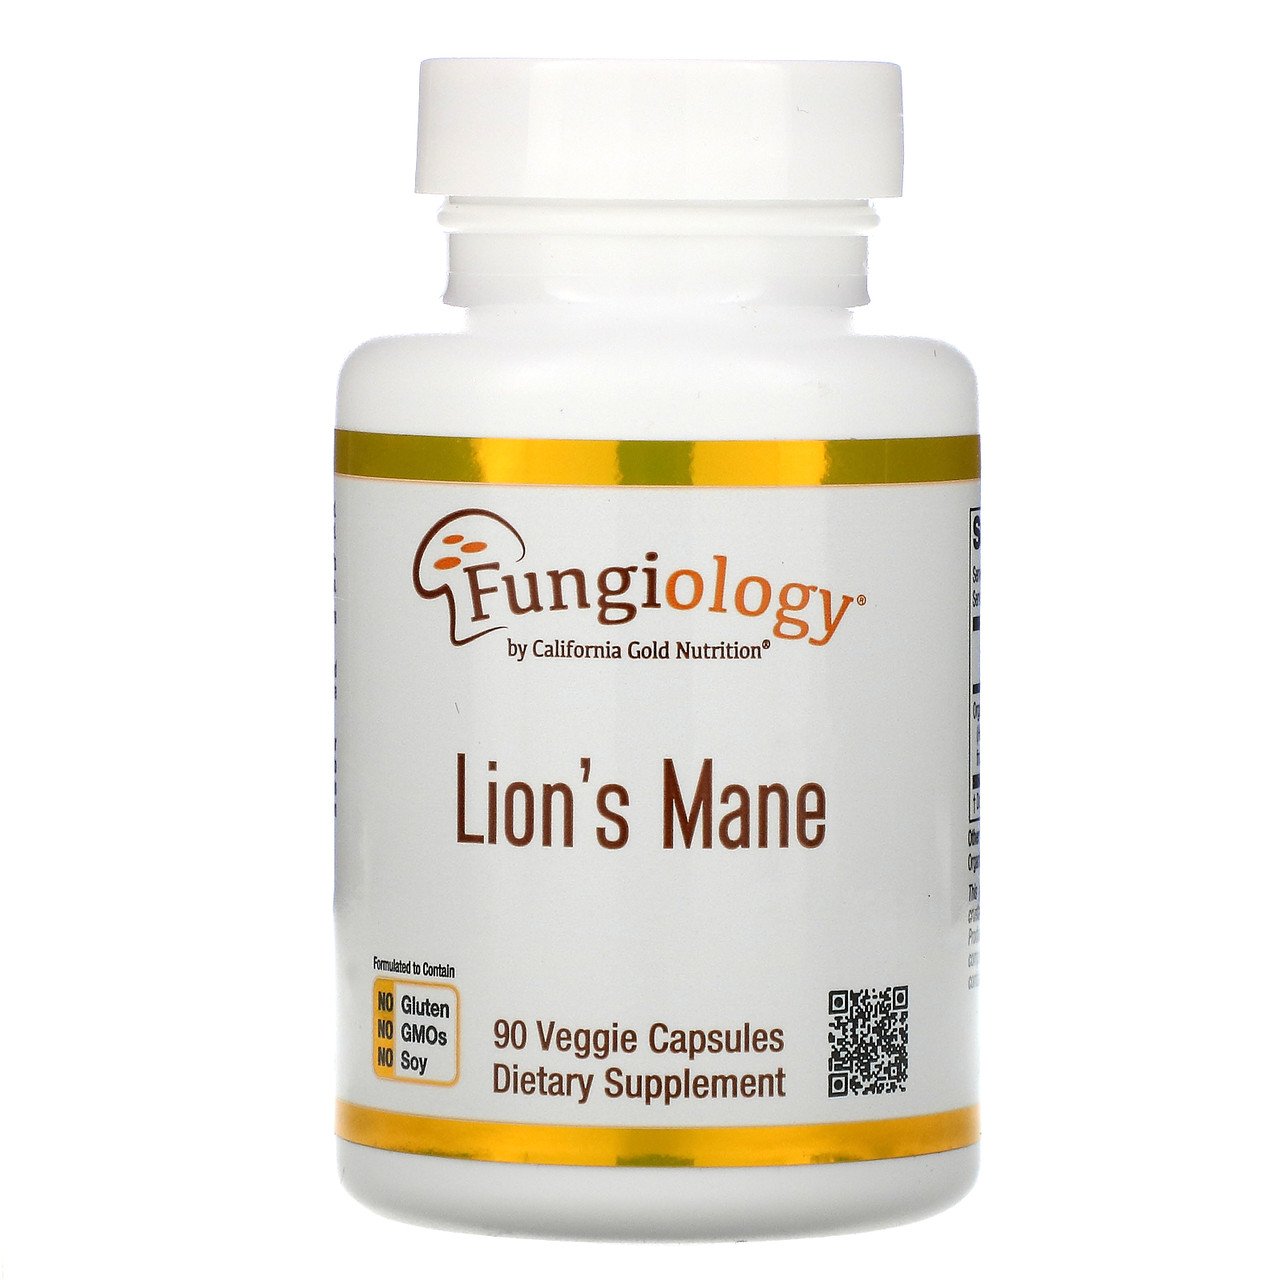 Харчова добавка California Gold Nutrition Lion's Mane 90 Caps,  ml, California Gold Nutrition. Special supplements. 